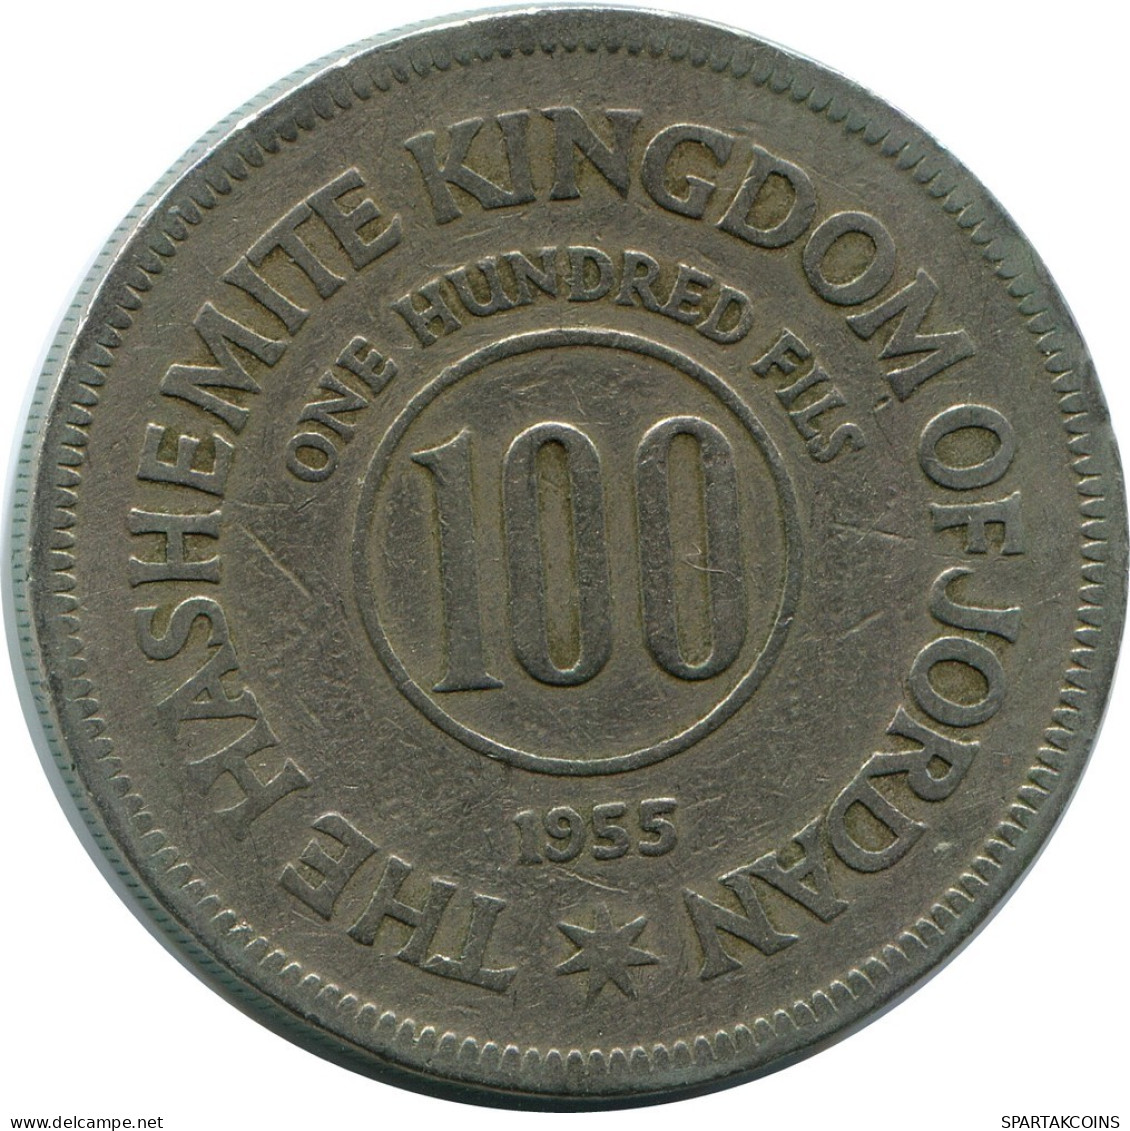 1 DIRHAM / 100 FILS 1955 JORDAN Coin #AP098.U.A - Jordanien